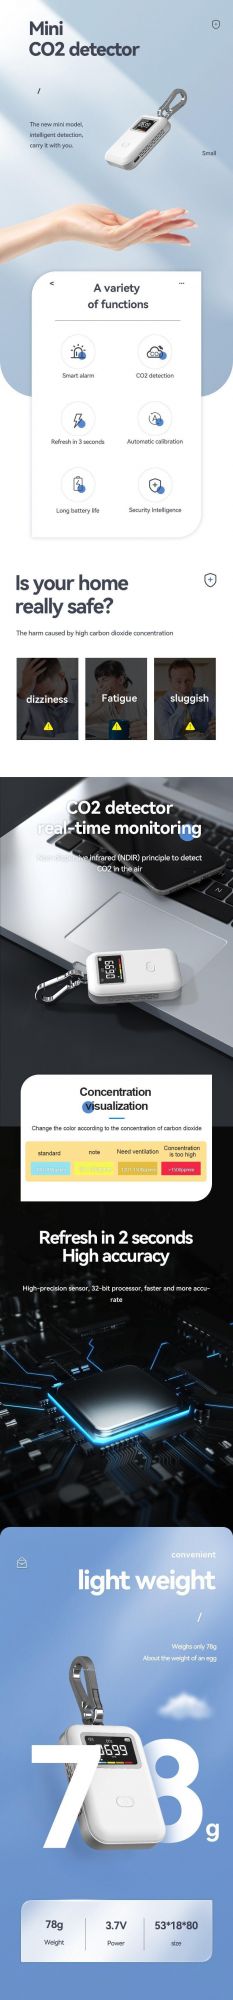 Mini Portable CO2 Meter Air Monitor CO2 Detector CO2 Alarm Detector Carbon Dioxide Detector